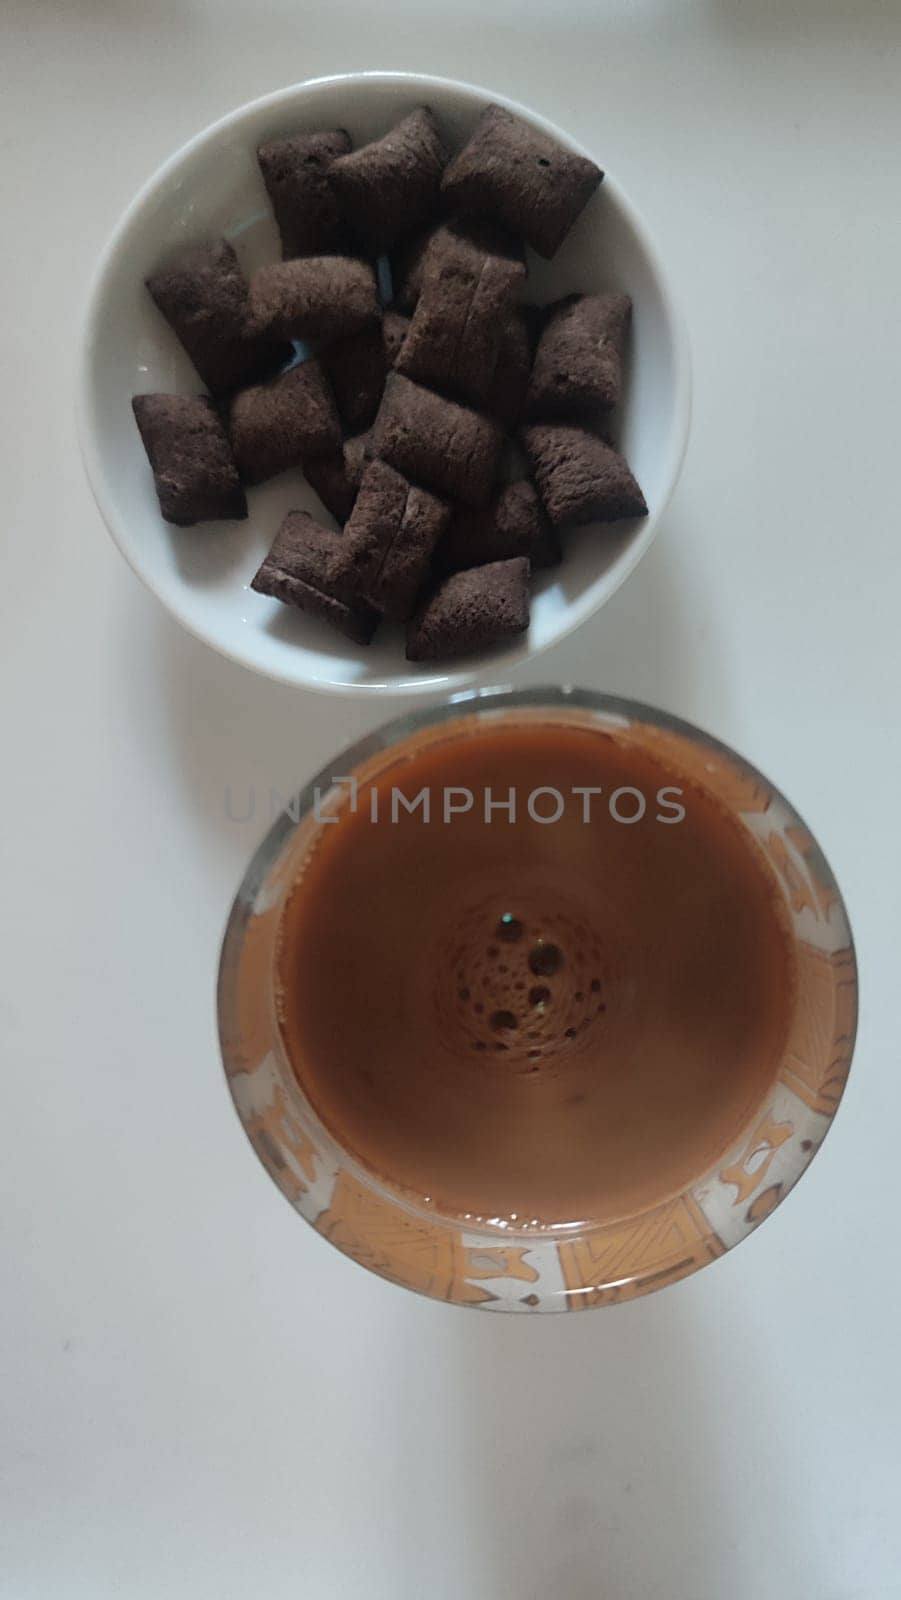 brown color coffee, sweet dessert chocolate, liquid foam drink. High quality photo